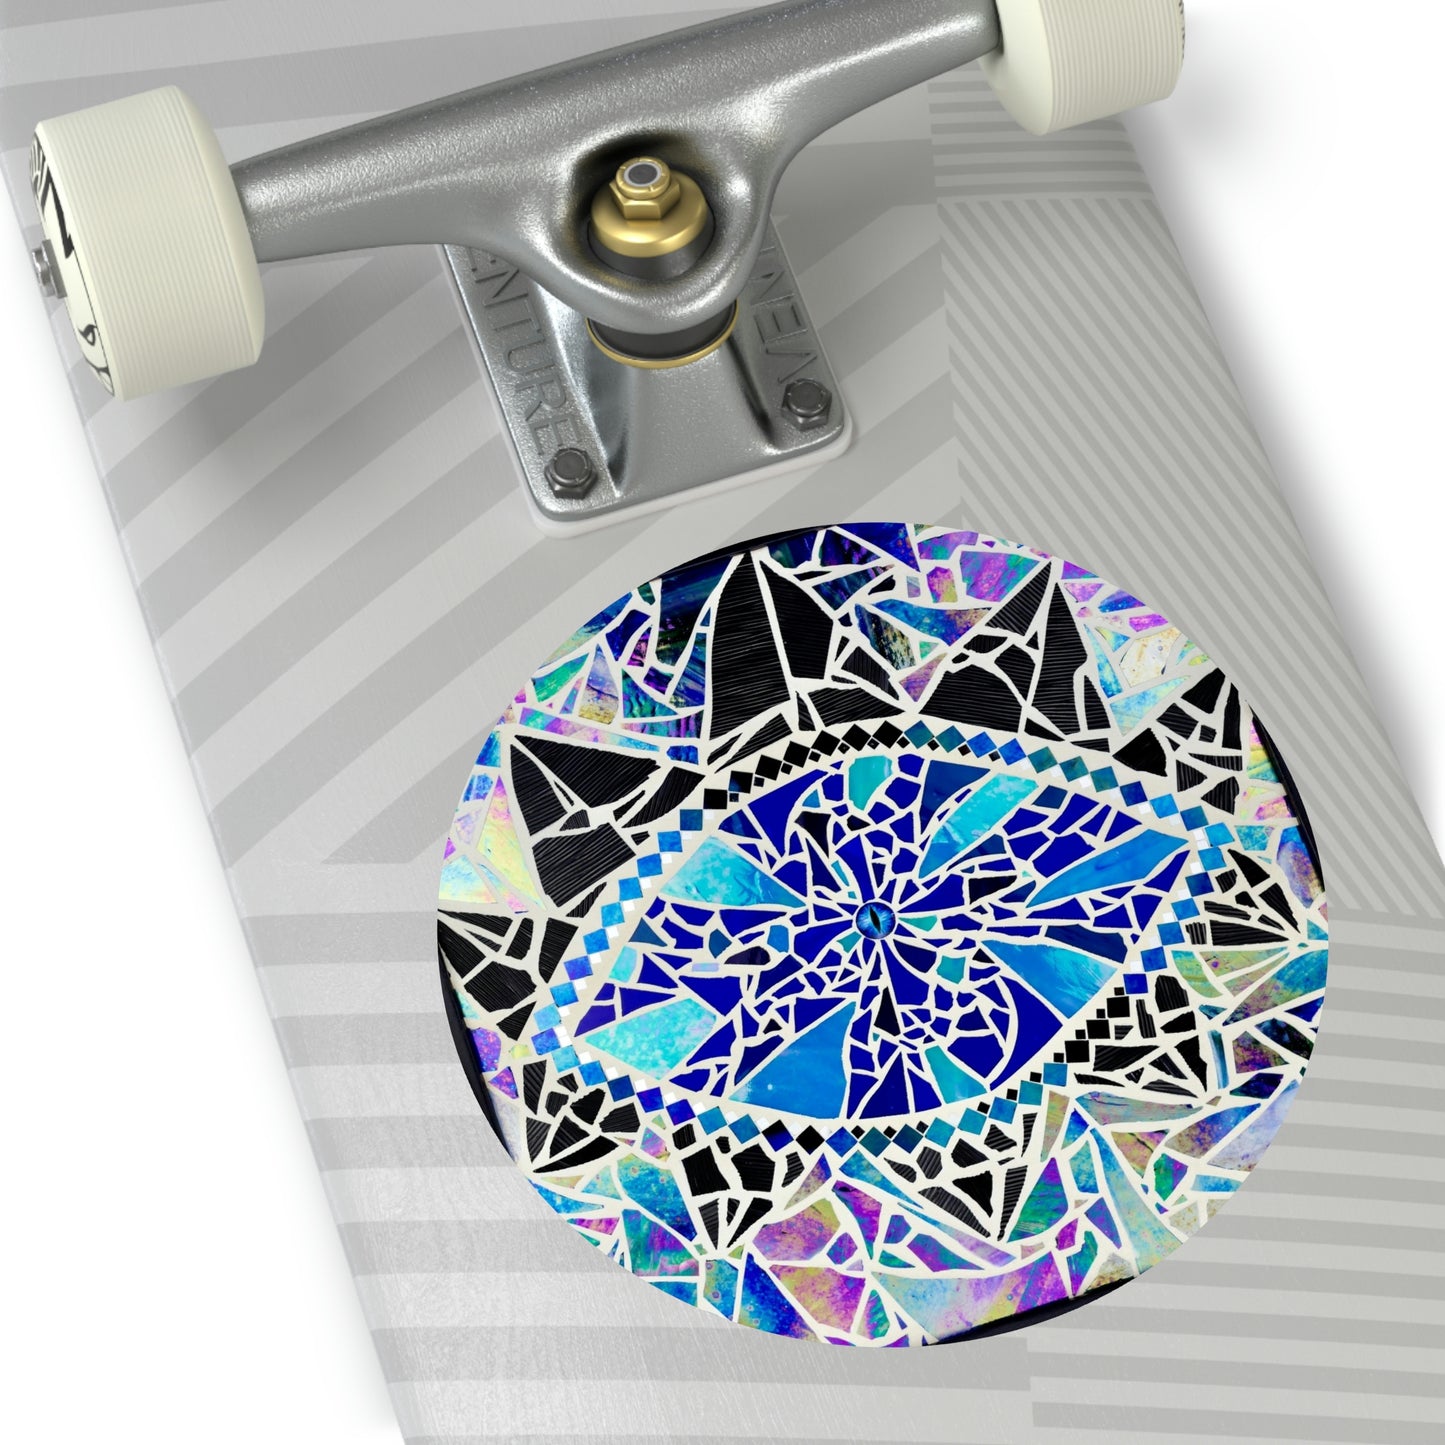 Blue Glass Mosaic Dragon Eye Fantasy Spiritual Mystical Art Round Vinyl Sticker